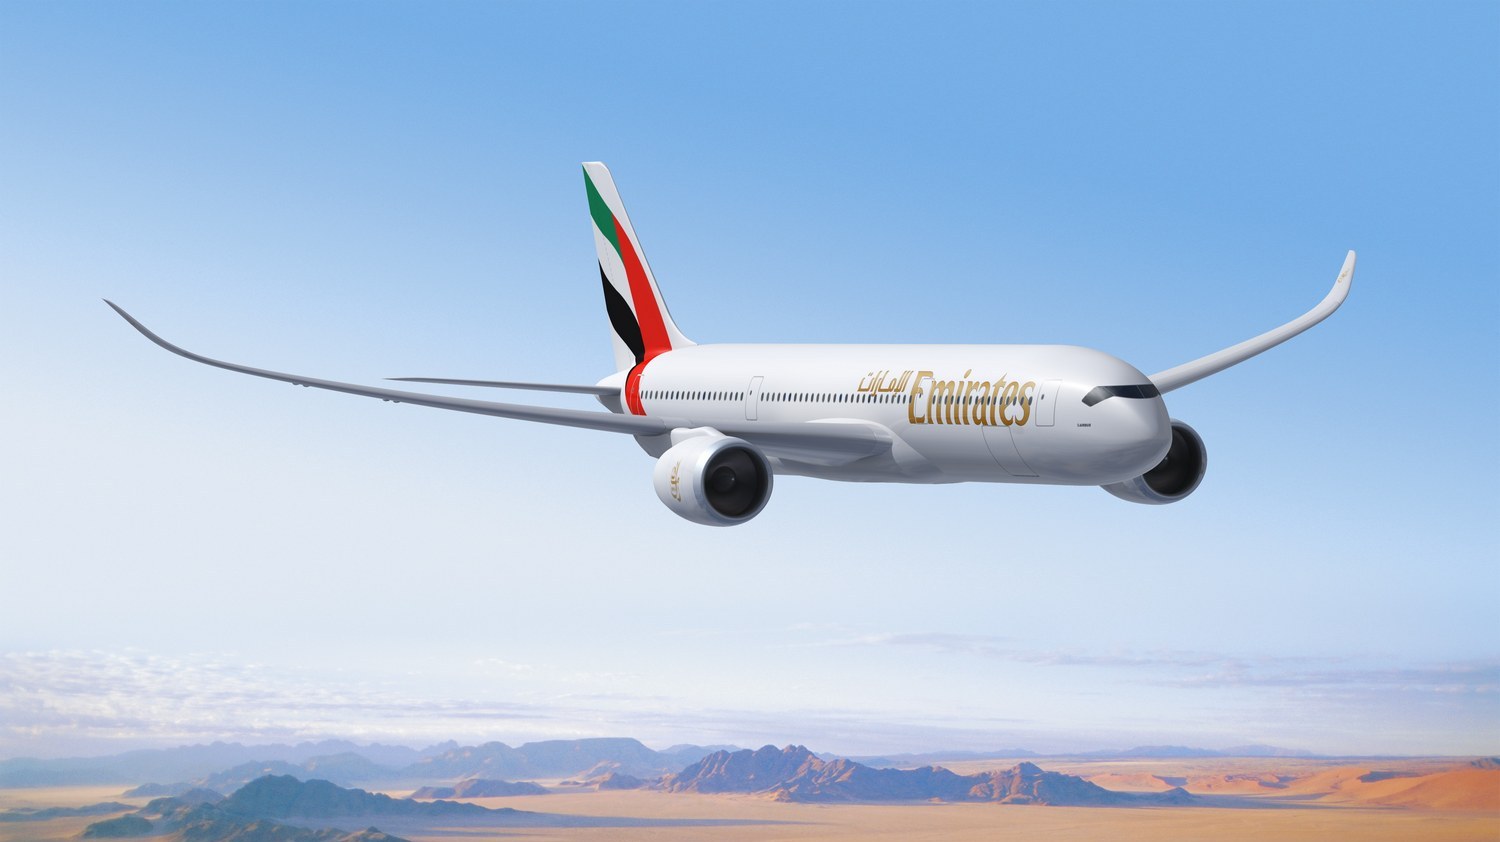 Radio pr: Emirates Airlines HD Photos | HDWallpapers360 ...